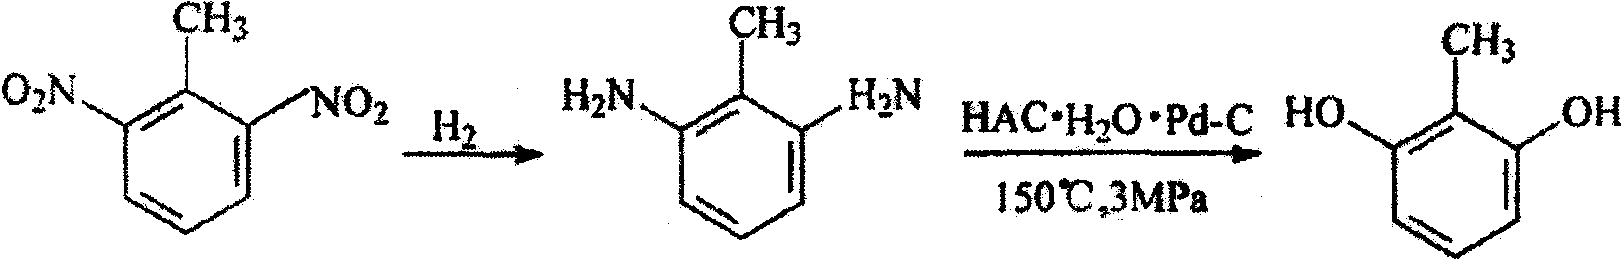 Synthesis method for 2, 6-dihydroxytoluene